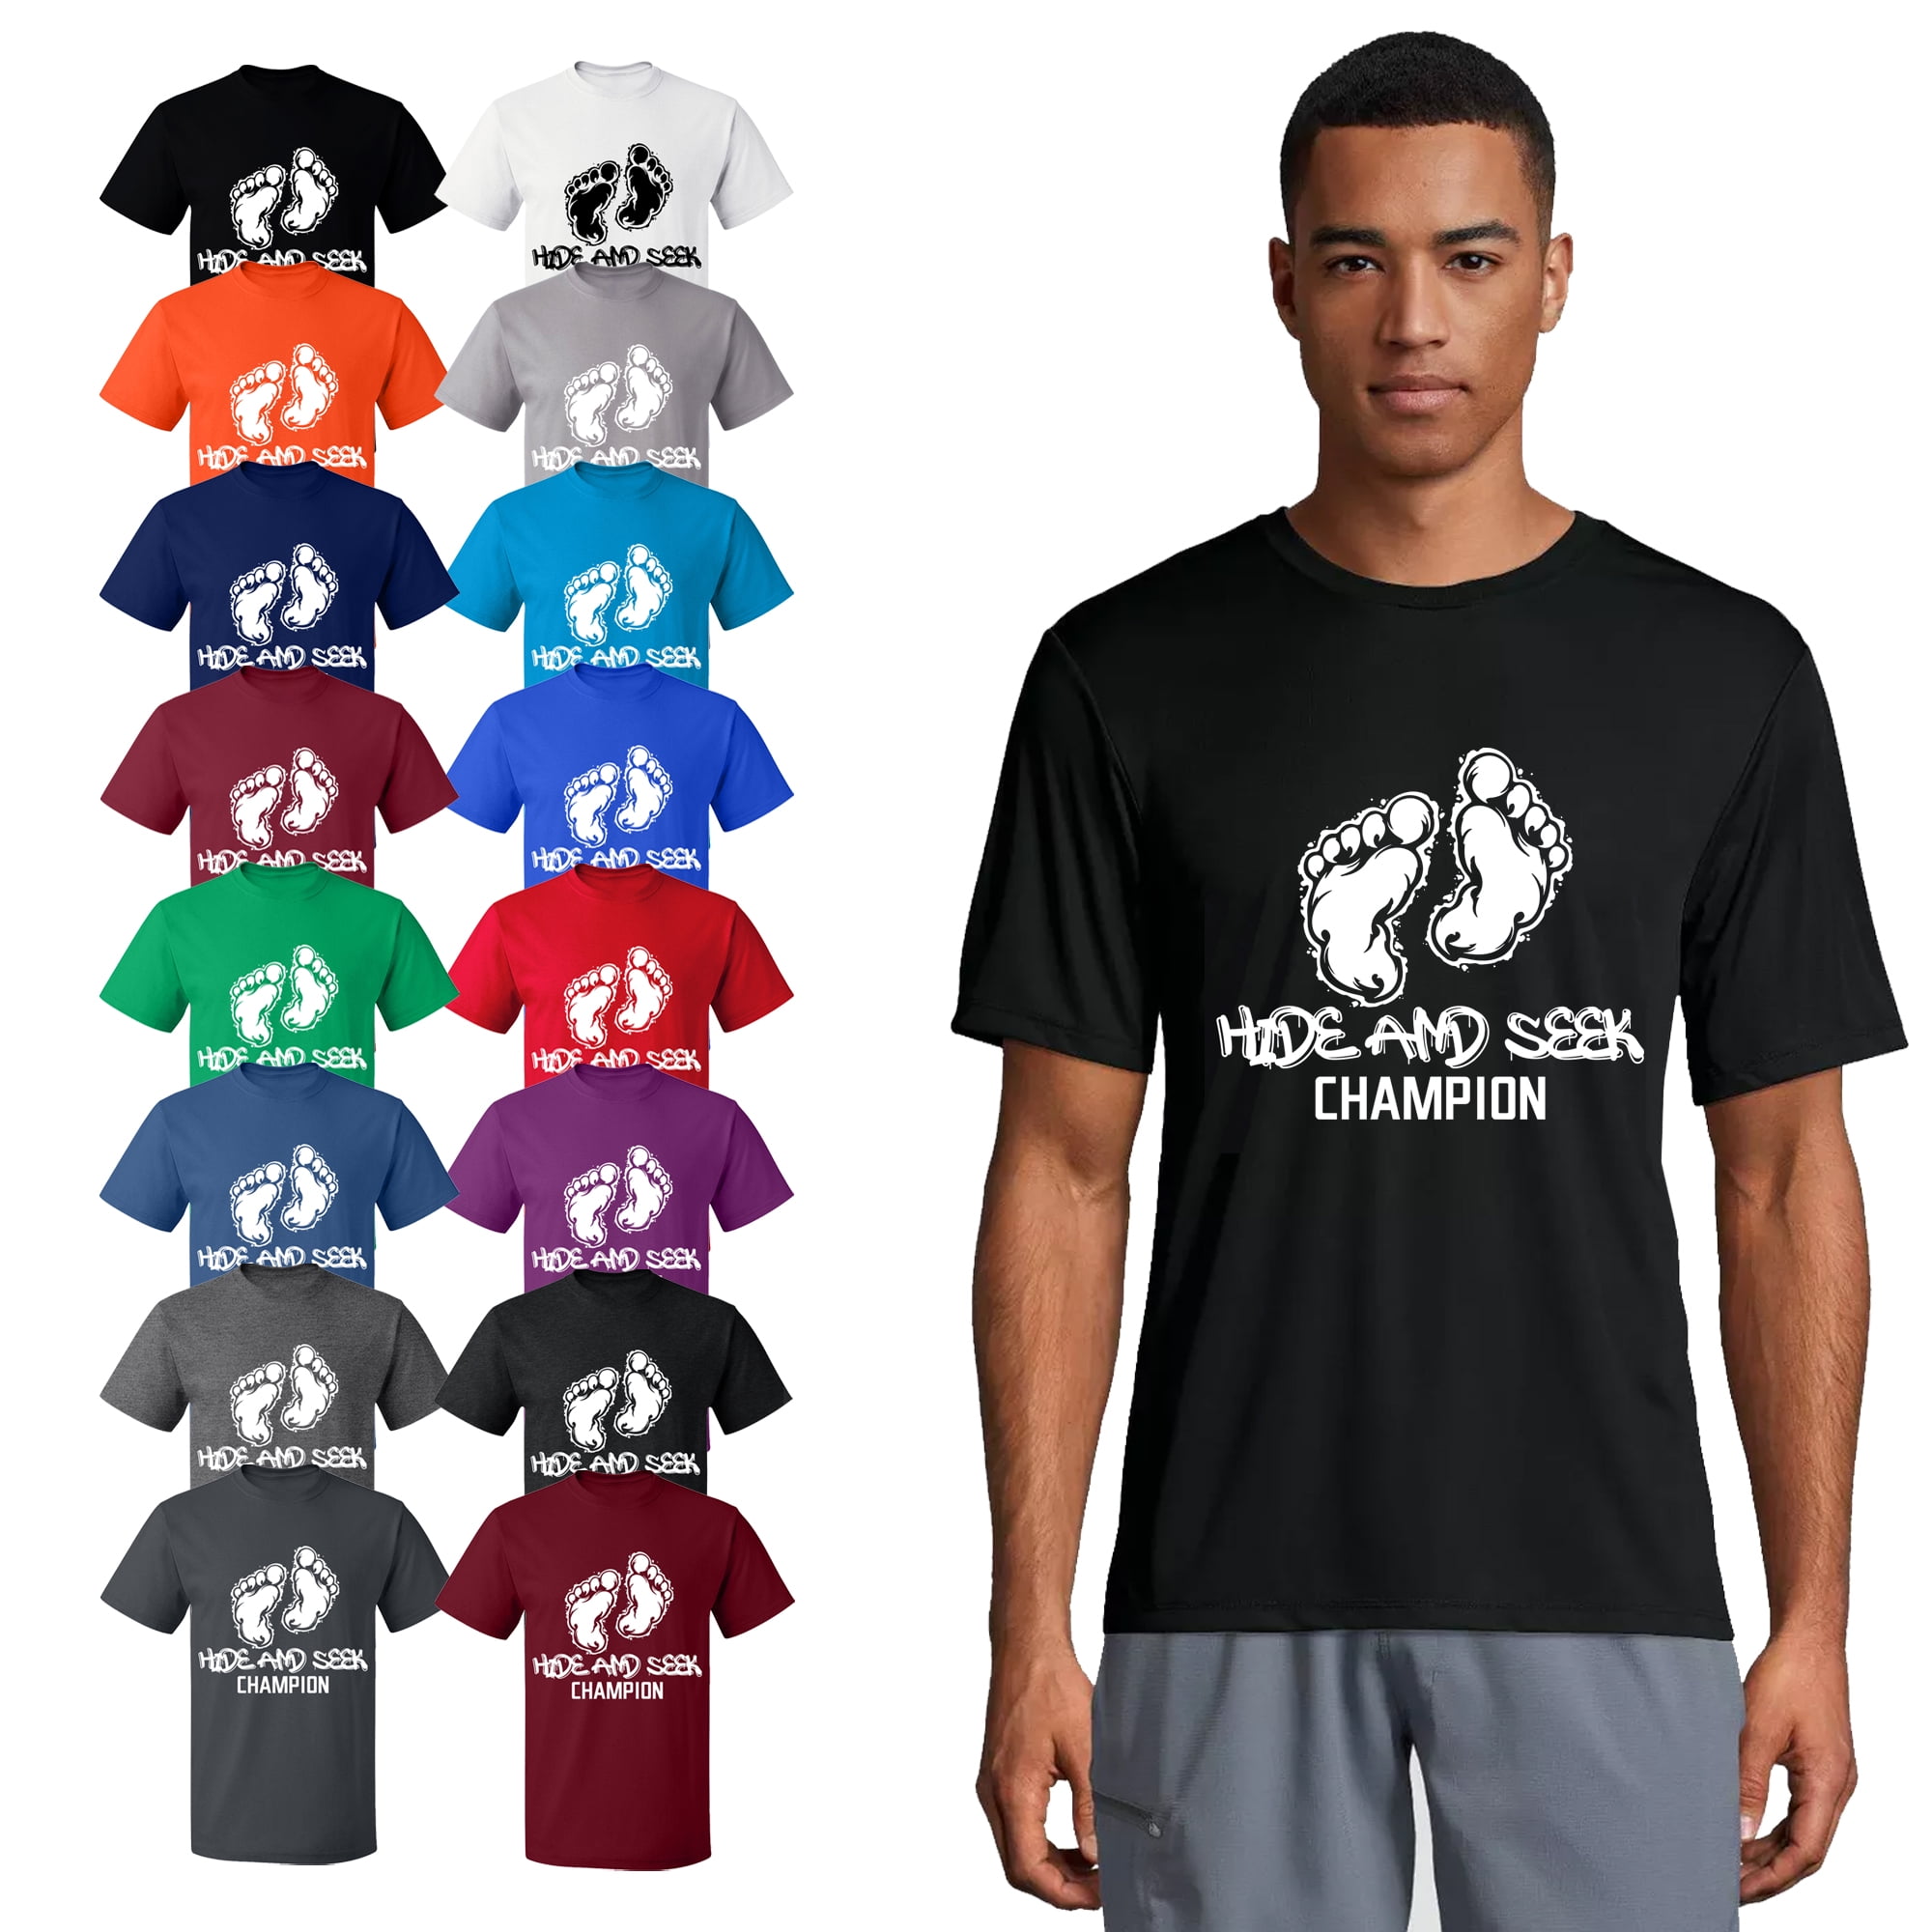 OXI T-Shirt - And Seek Champion, Basic Casual T-Shirt for Men's and Women Fleece T-Shirt Short Sleeve Graphite Heather Medium - Walmart.com